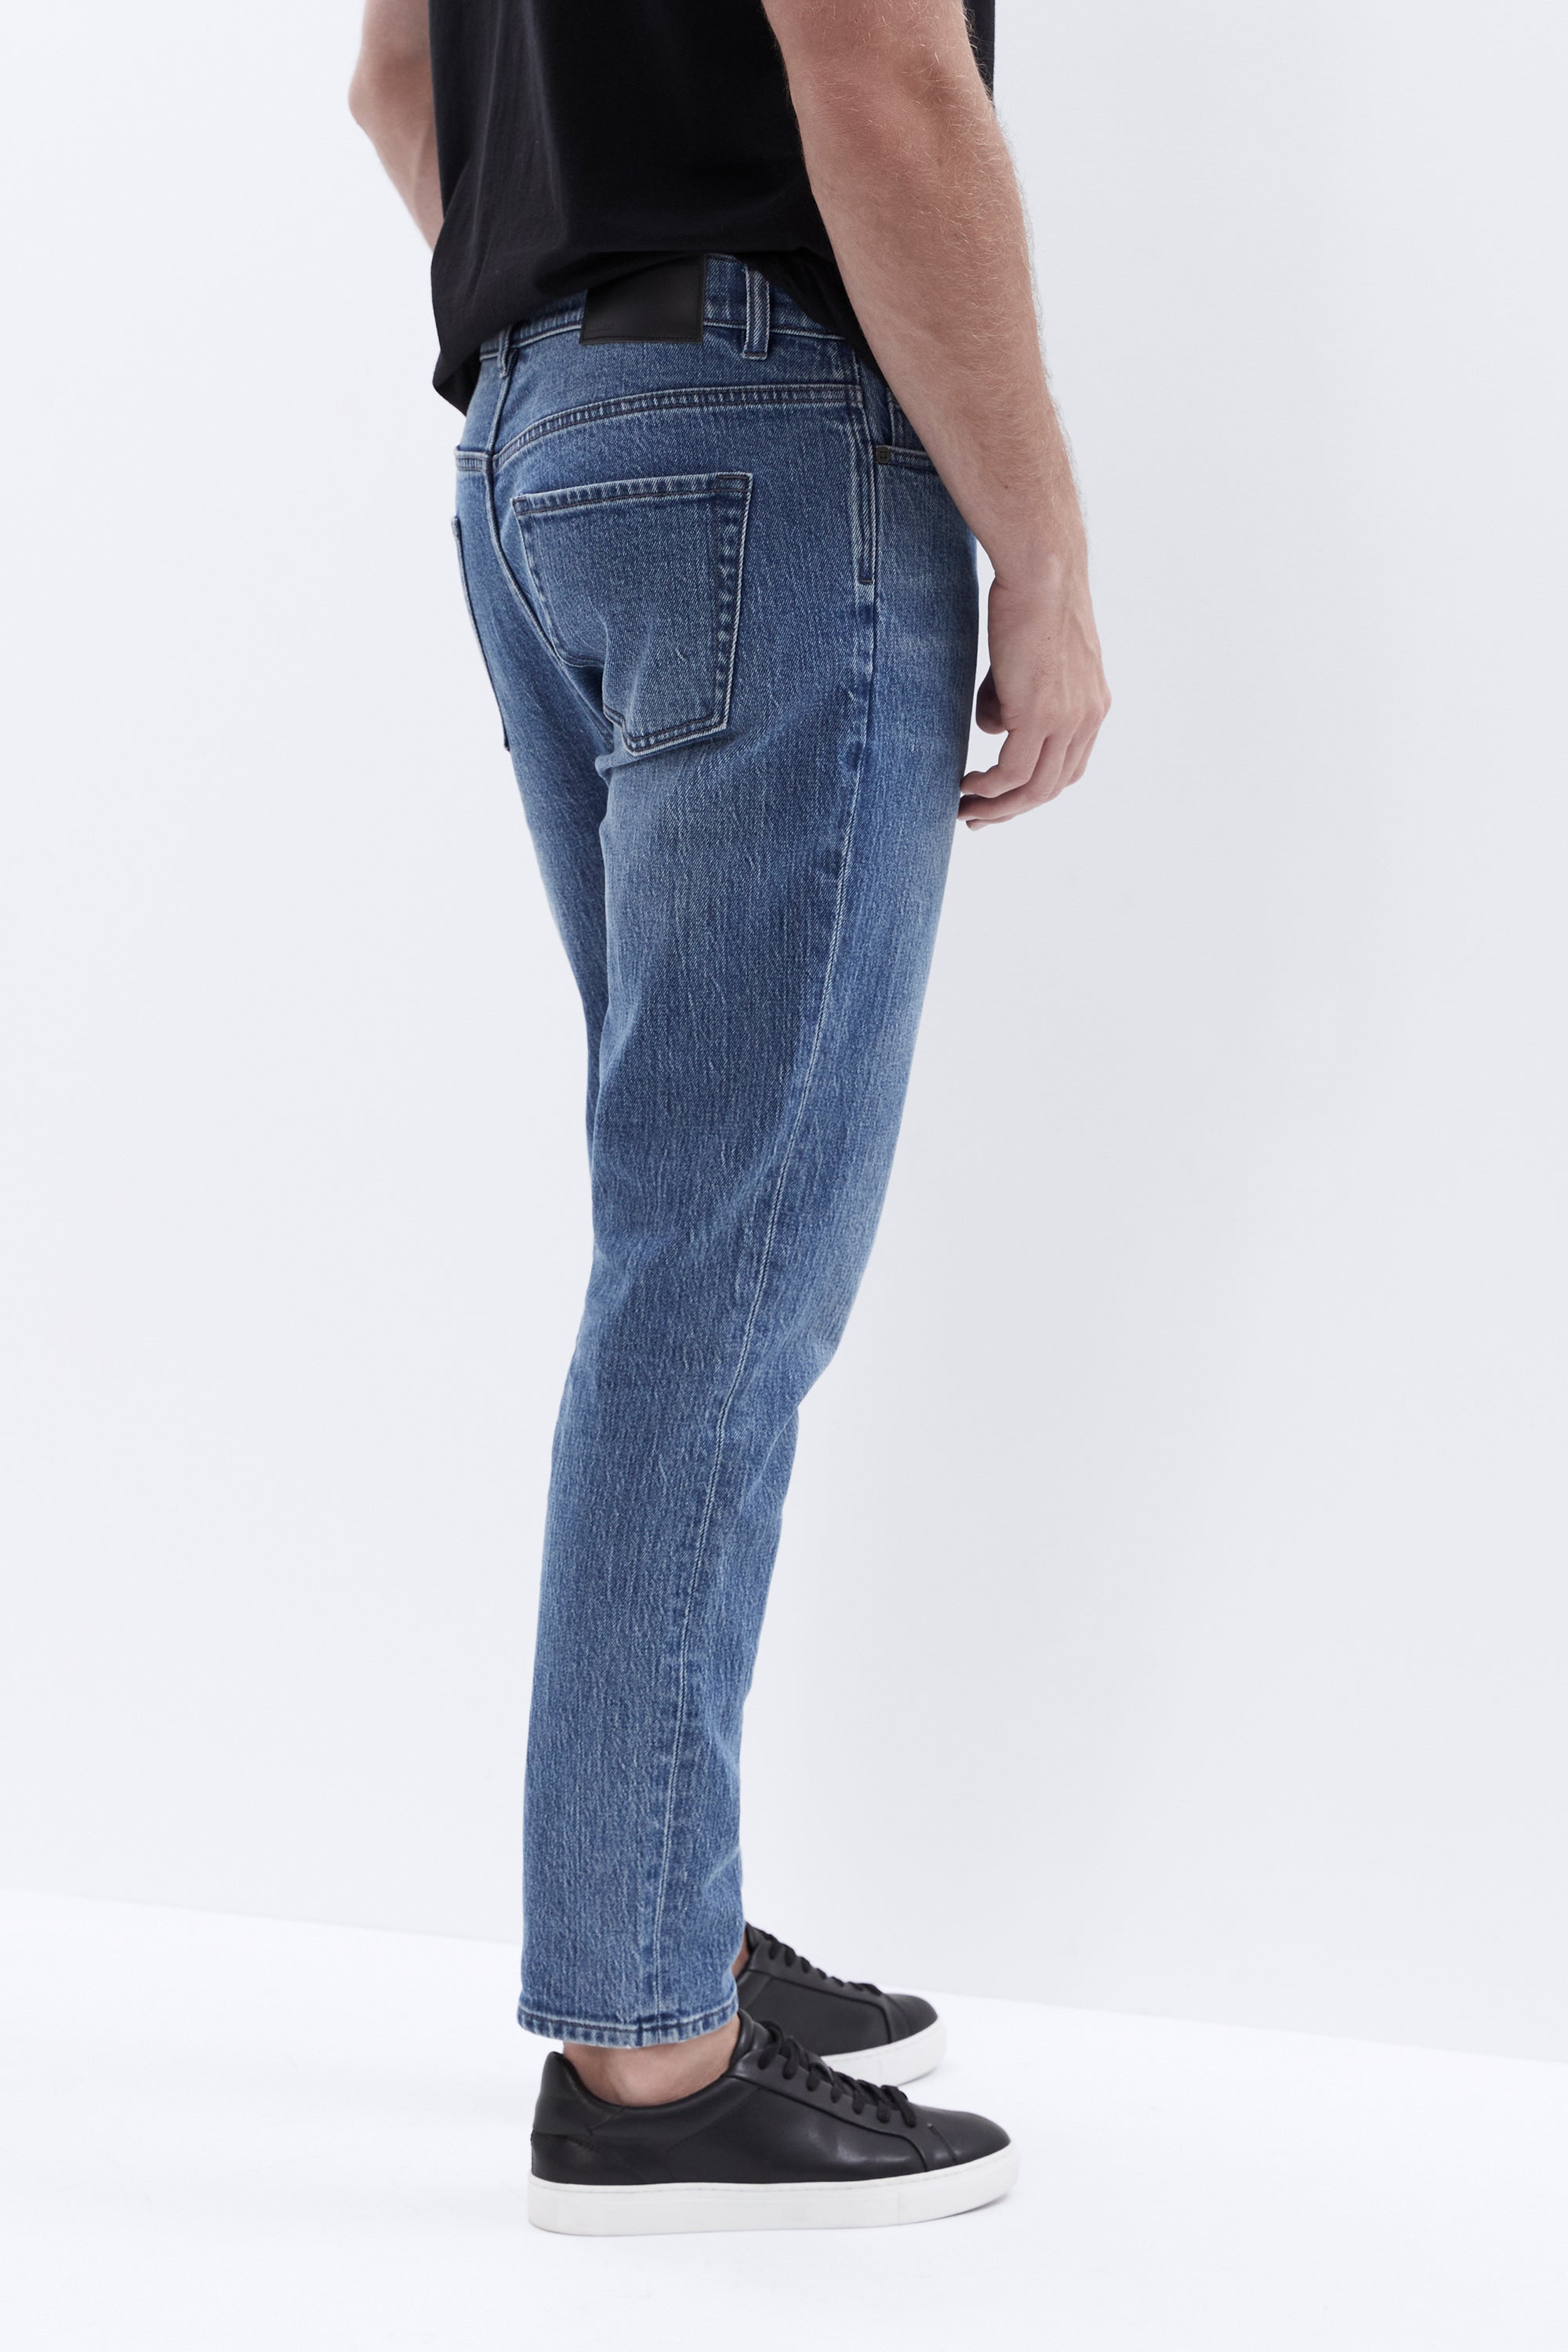 IDEALSANXUN Men’s Elastic Waist Jeans/Twill Casual Pants : :  Clothing, Shoes & Accessories